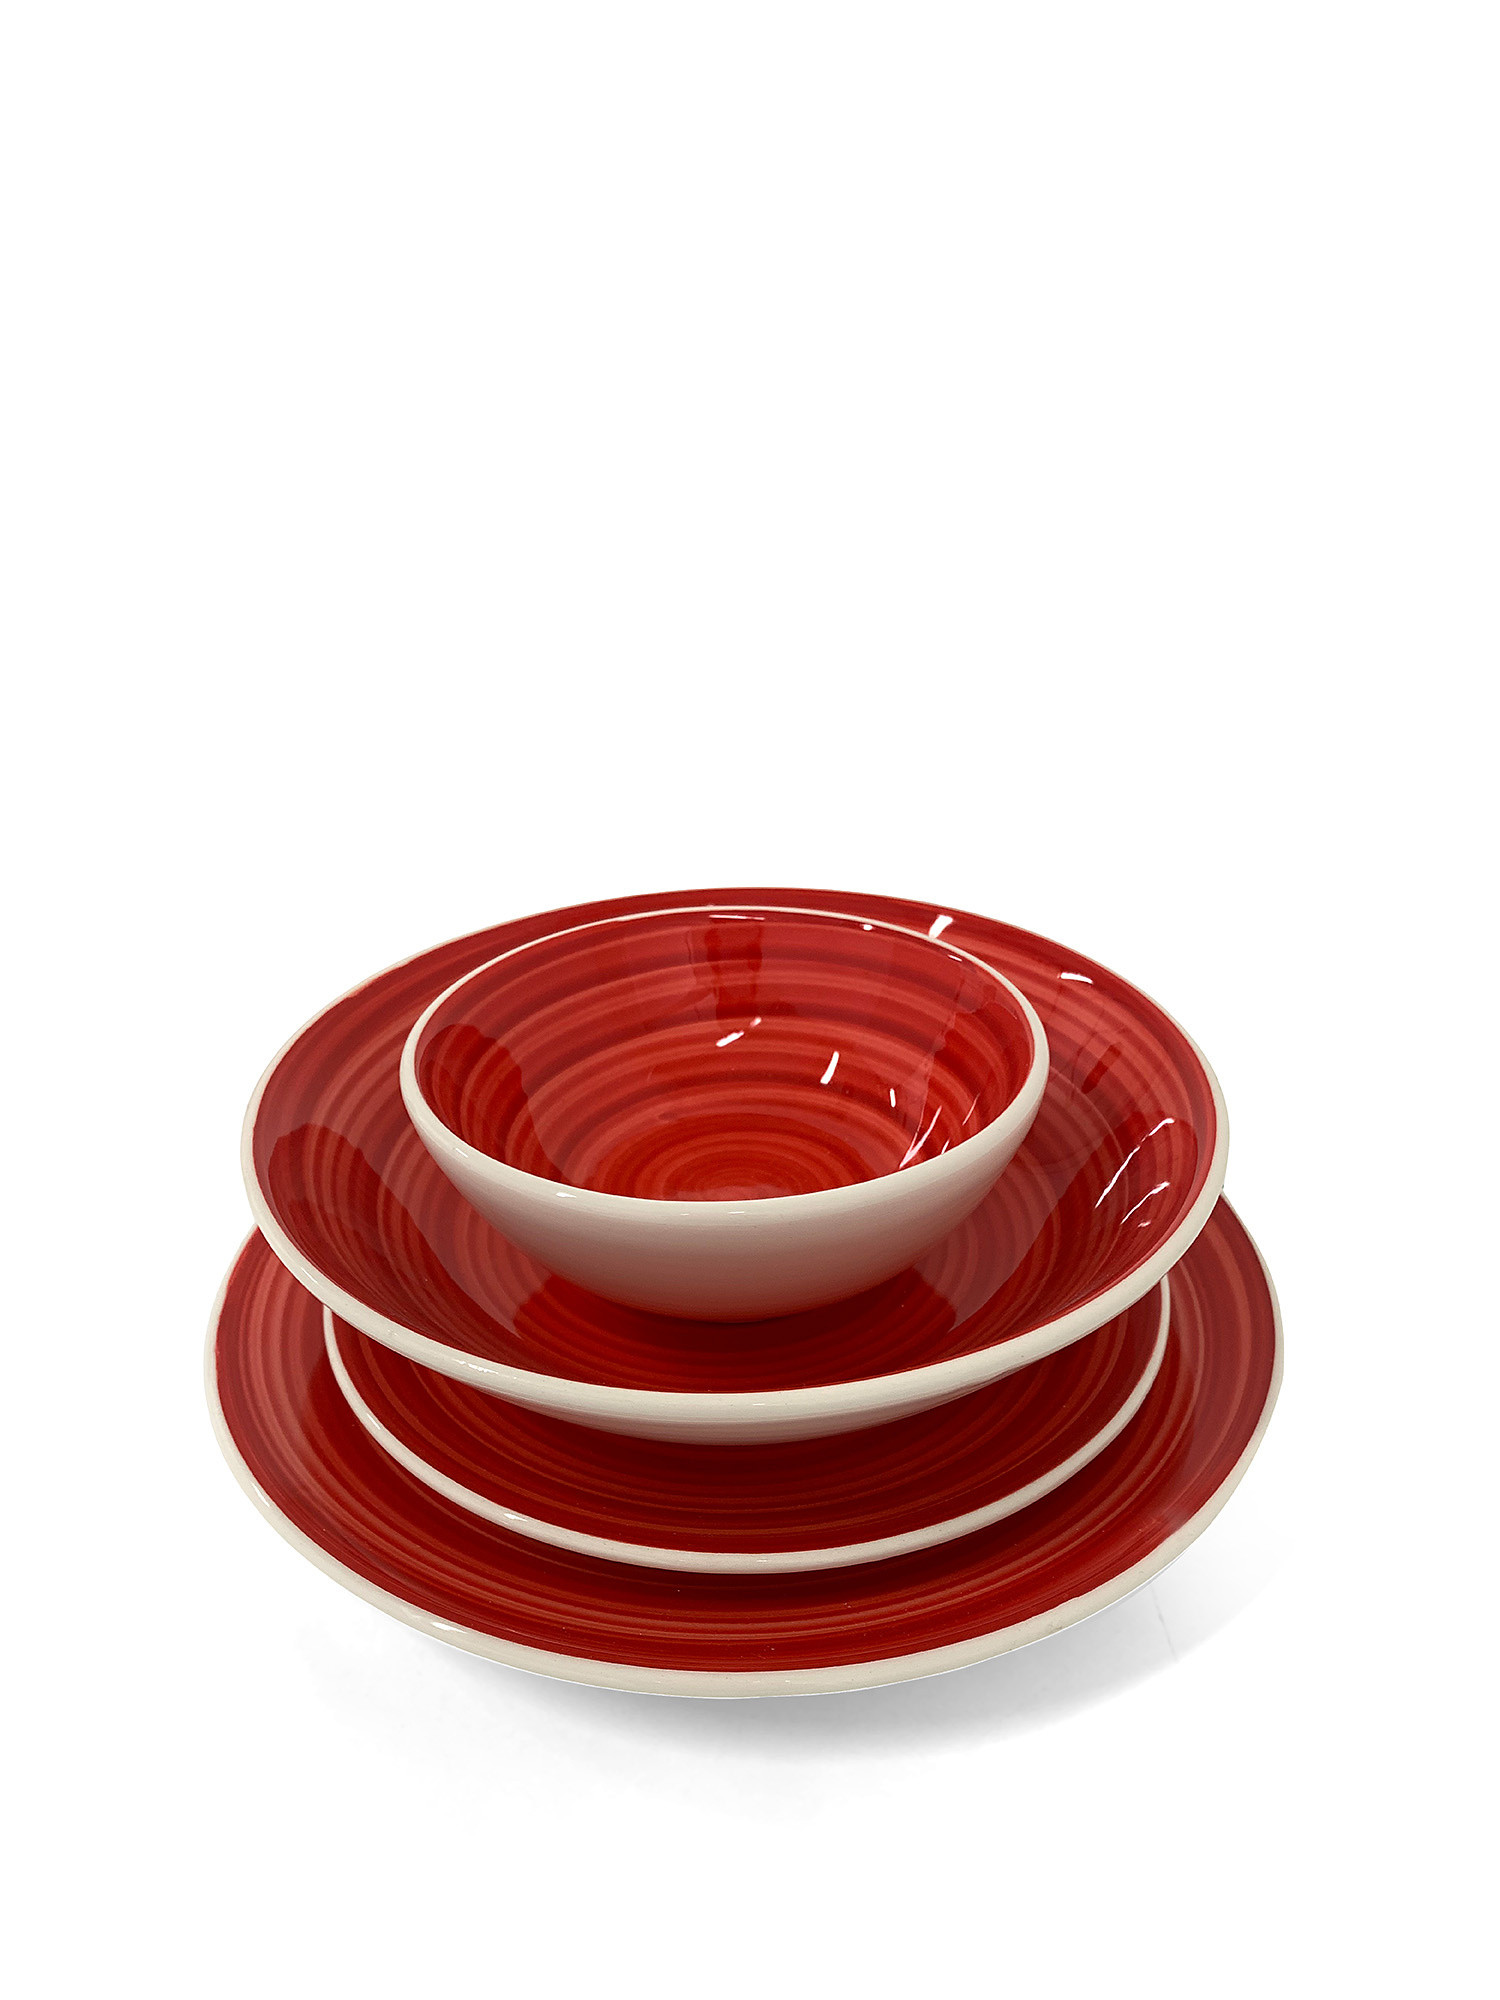 Piatto piano ceramica dipinta a mano Spirale, Rosso, large image number 1